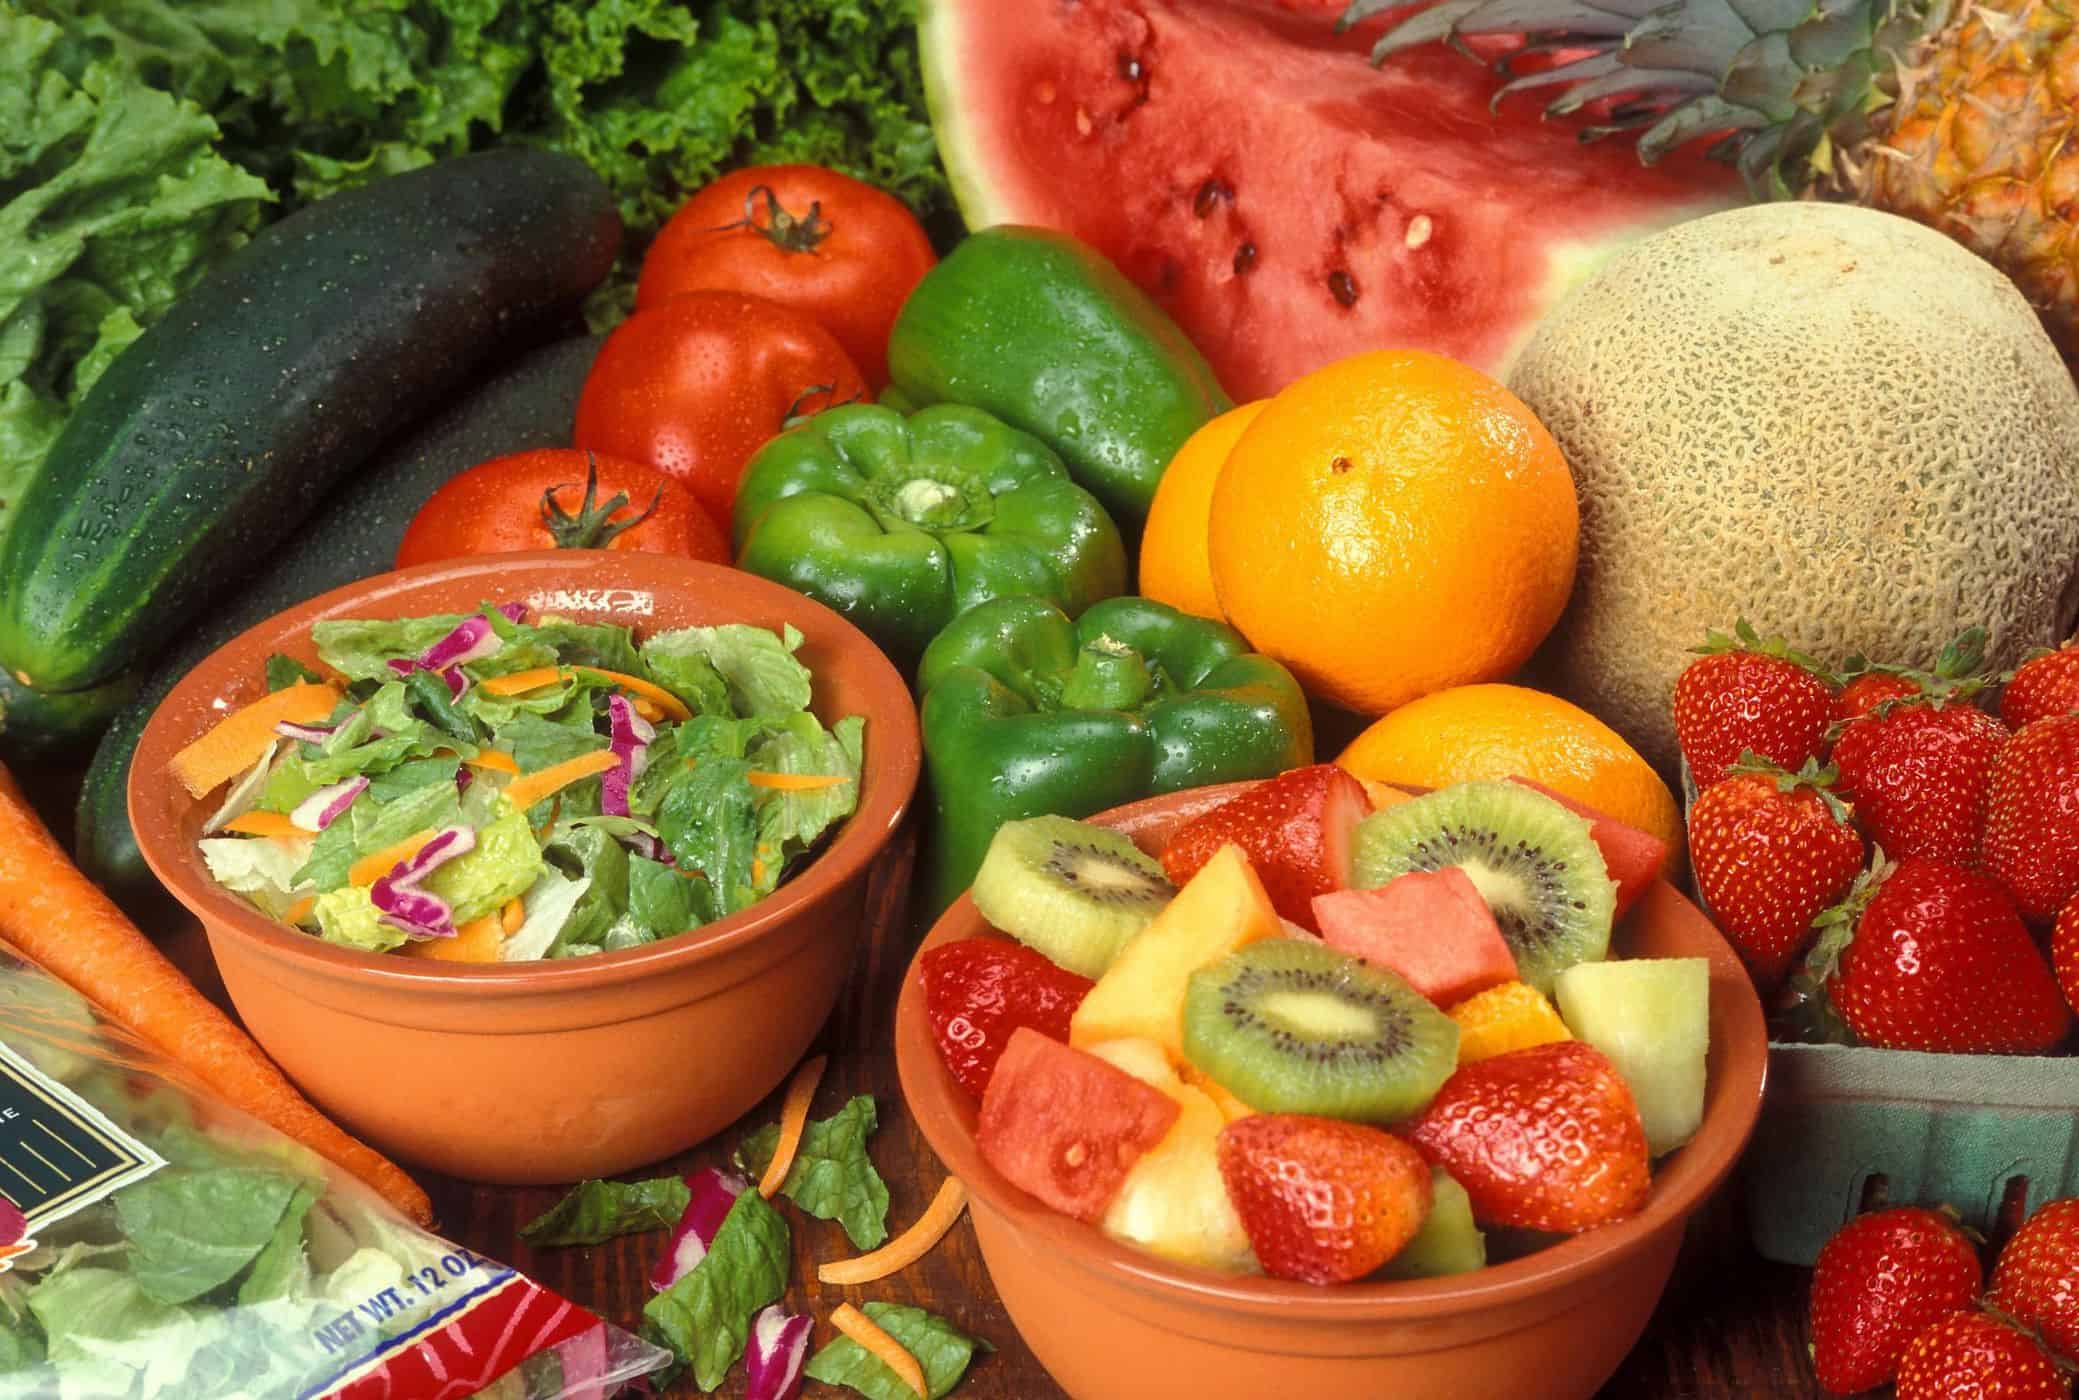 Frutta e verdura fresca vs frutta e verdura surgelata, qual è più nutriente?